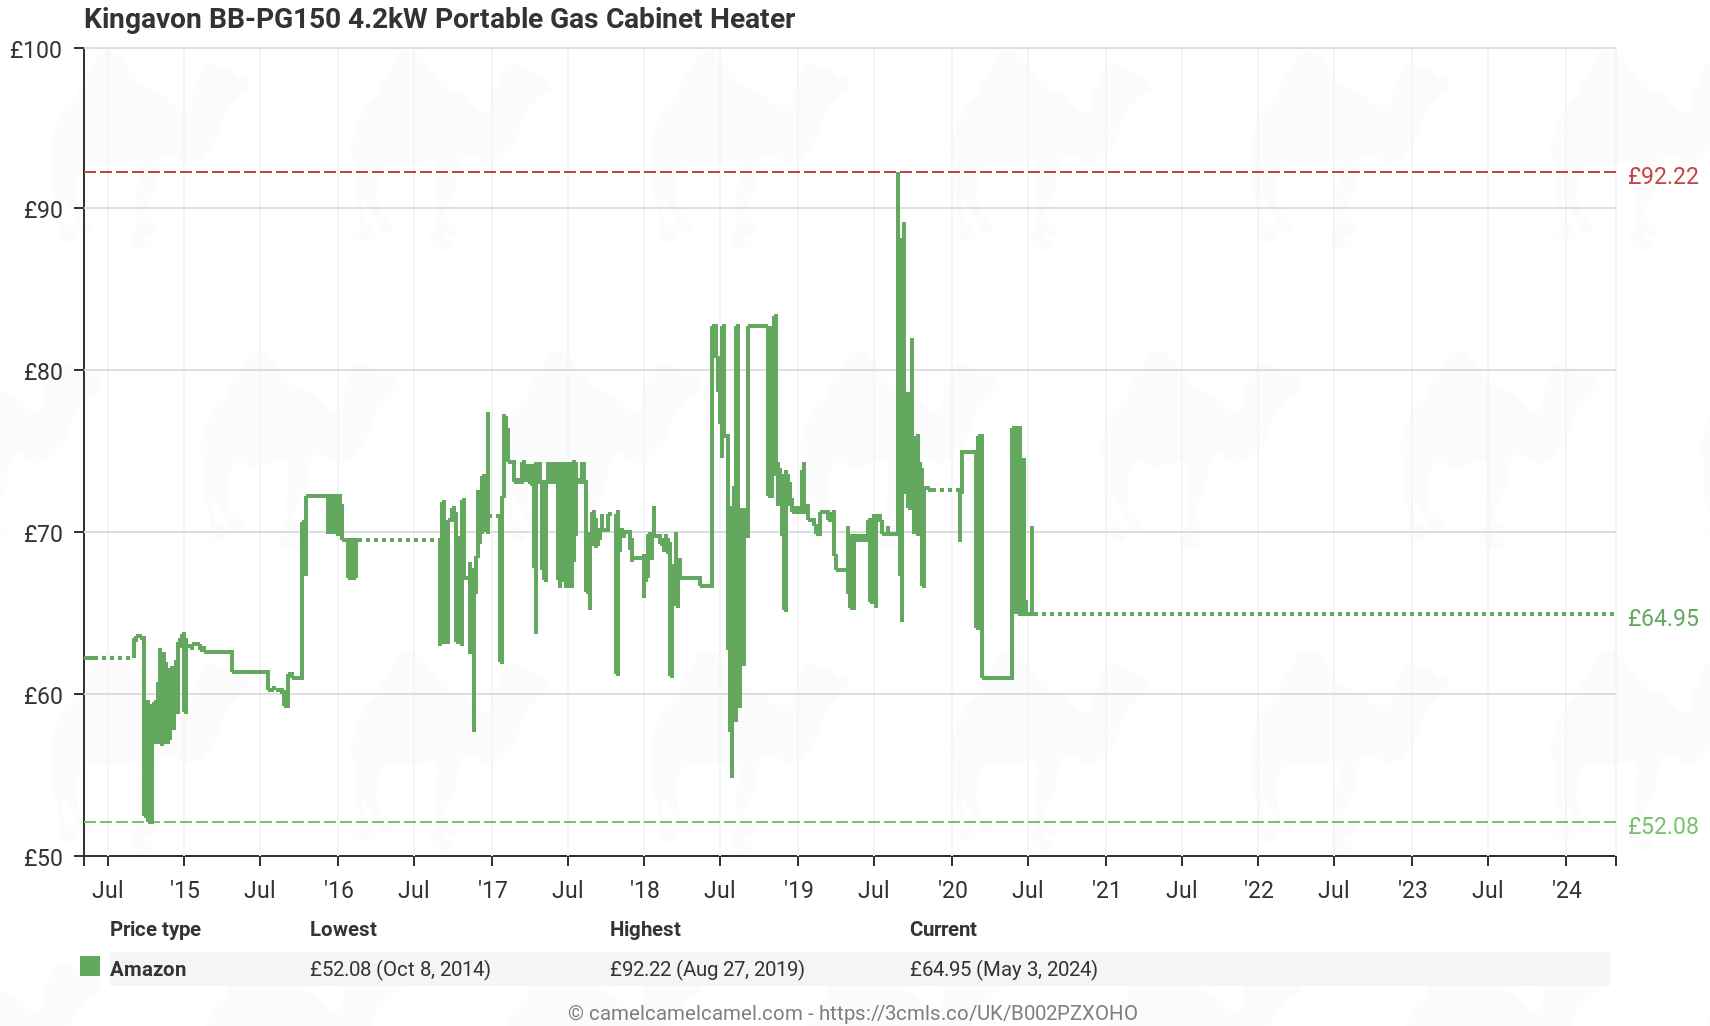 Kingavon BB-PG150 4.2kW Portable Gas Cabinet Heater - Price History: B002PZXOHO